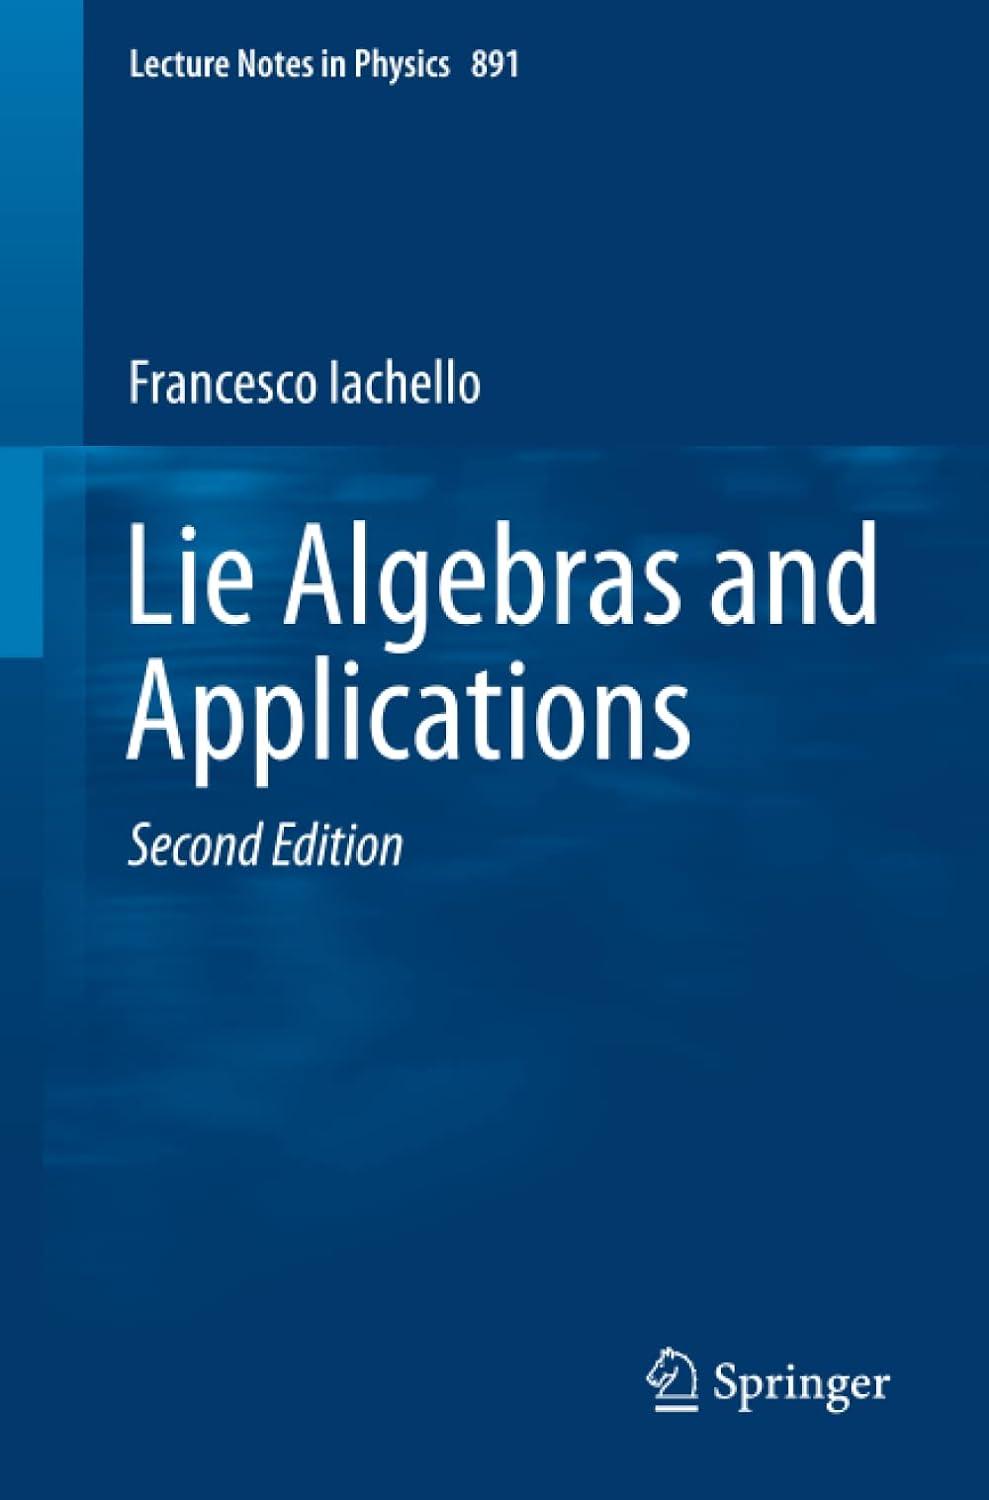 lie algebras and applications 2nd edition francesco iachello 3662444933, 978-3662444931